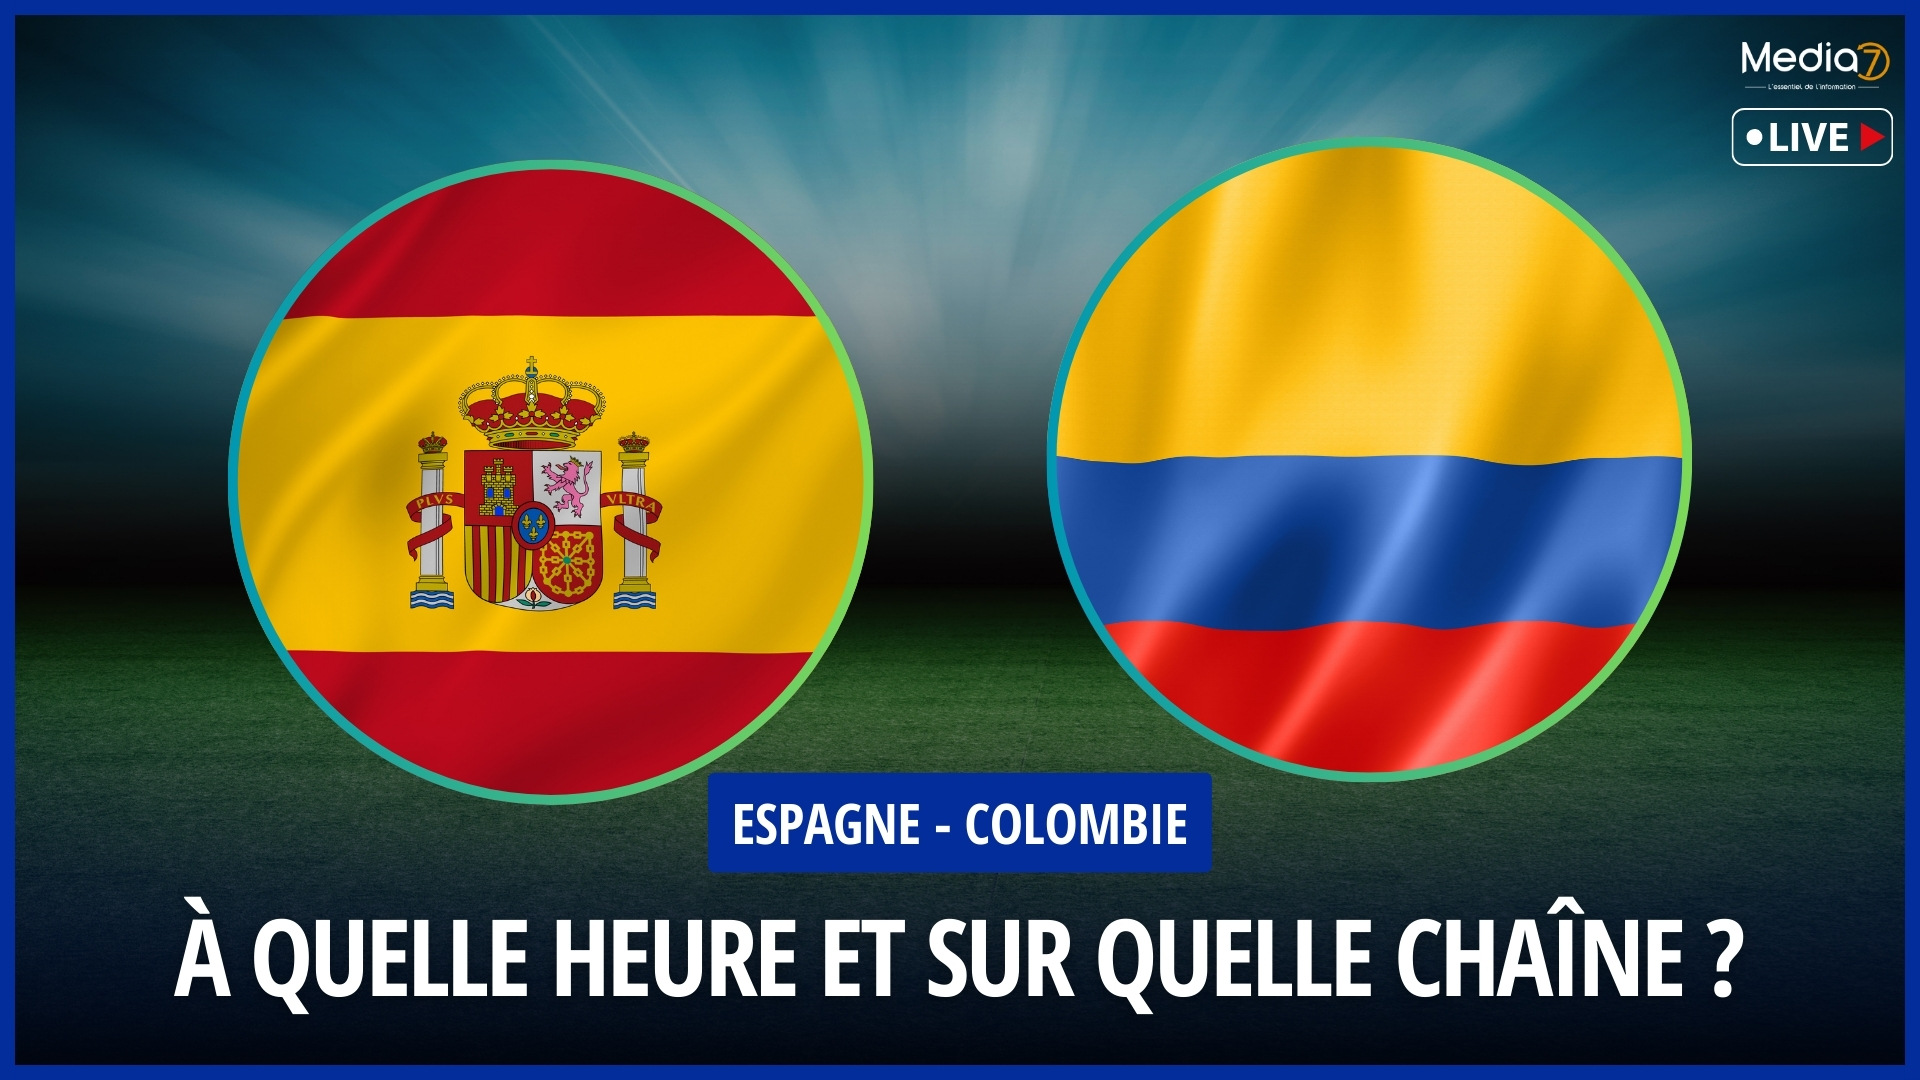 Espagne - Colombie